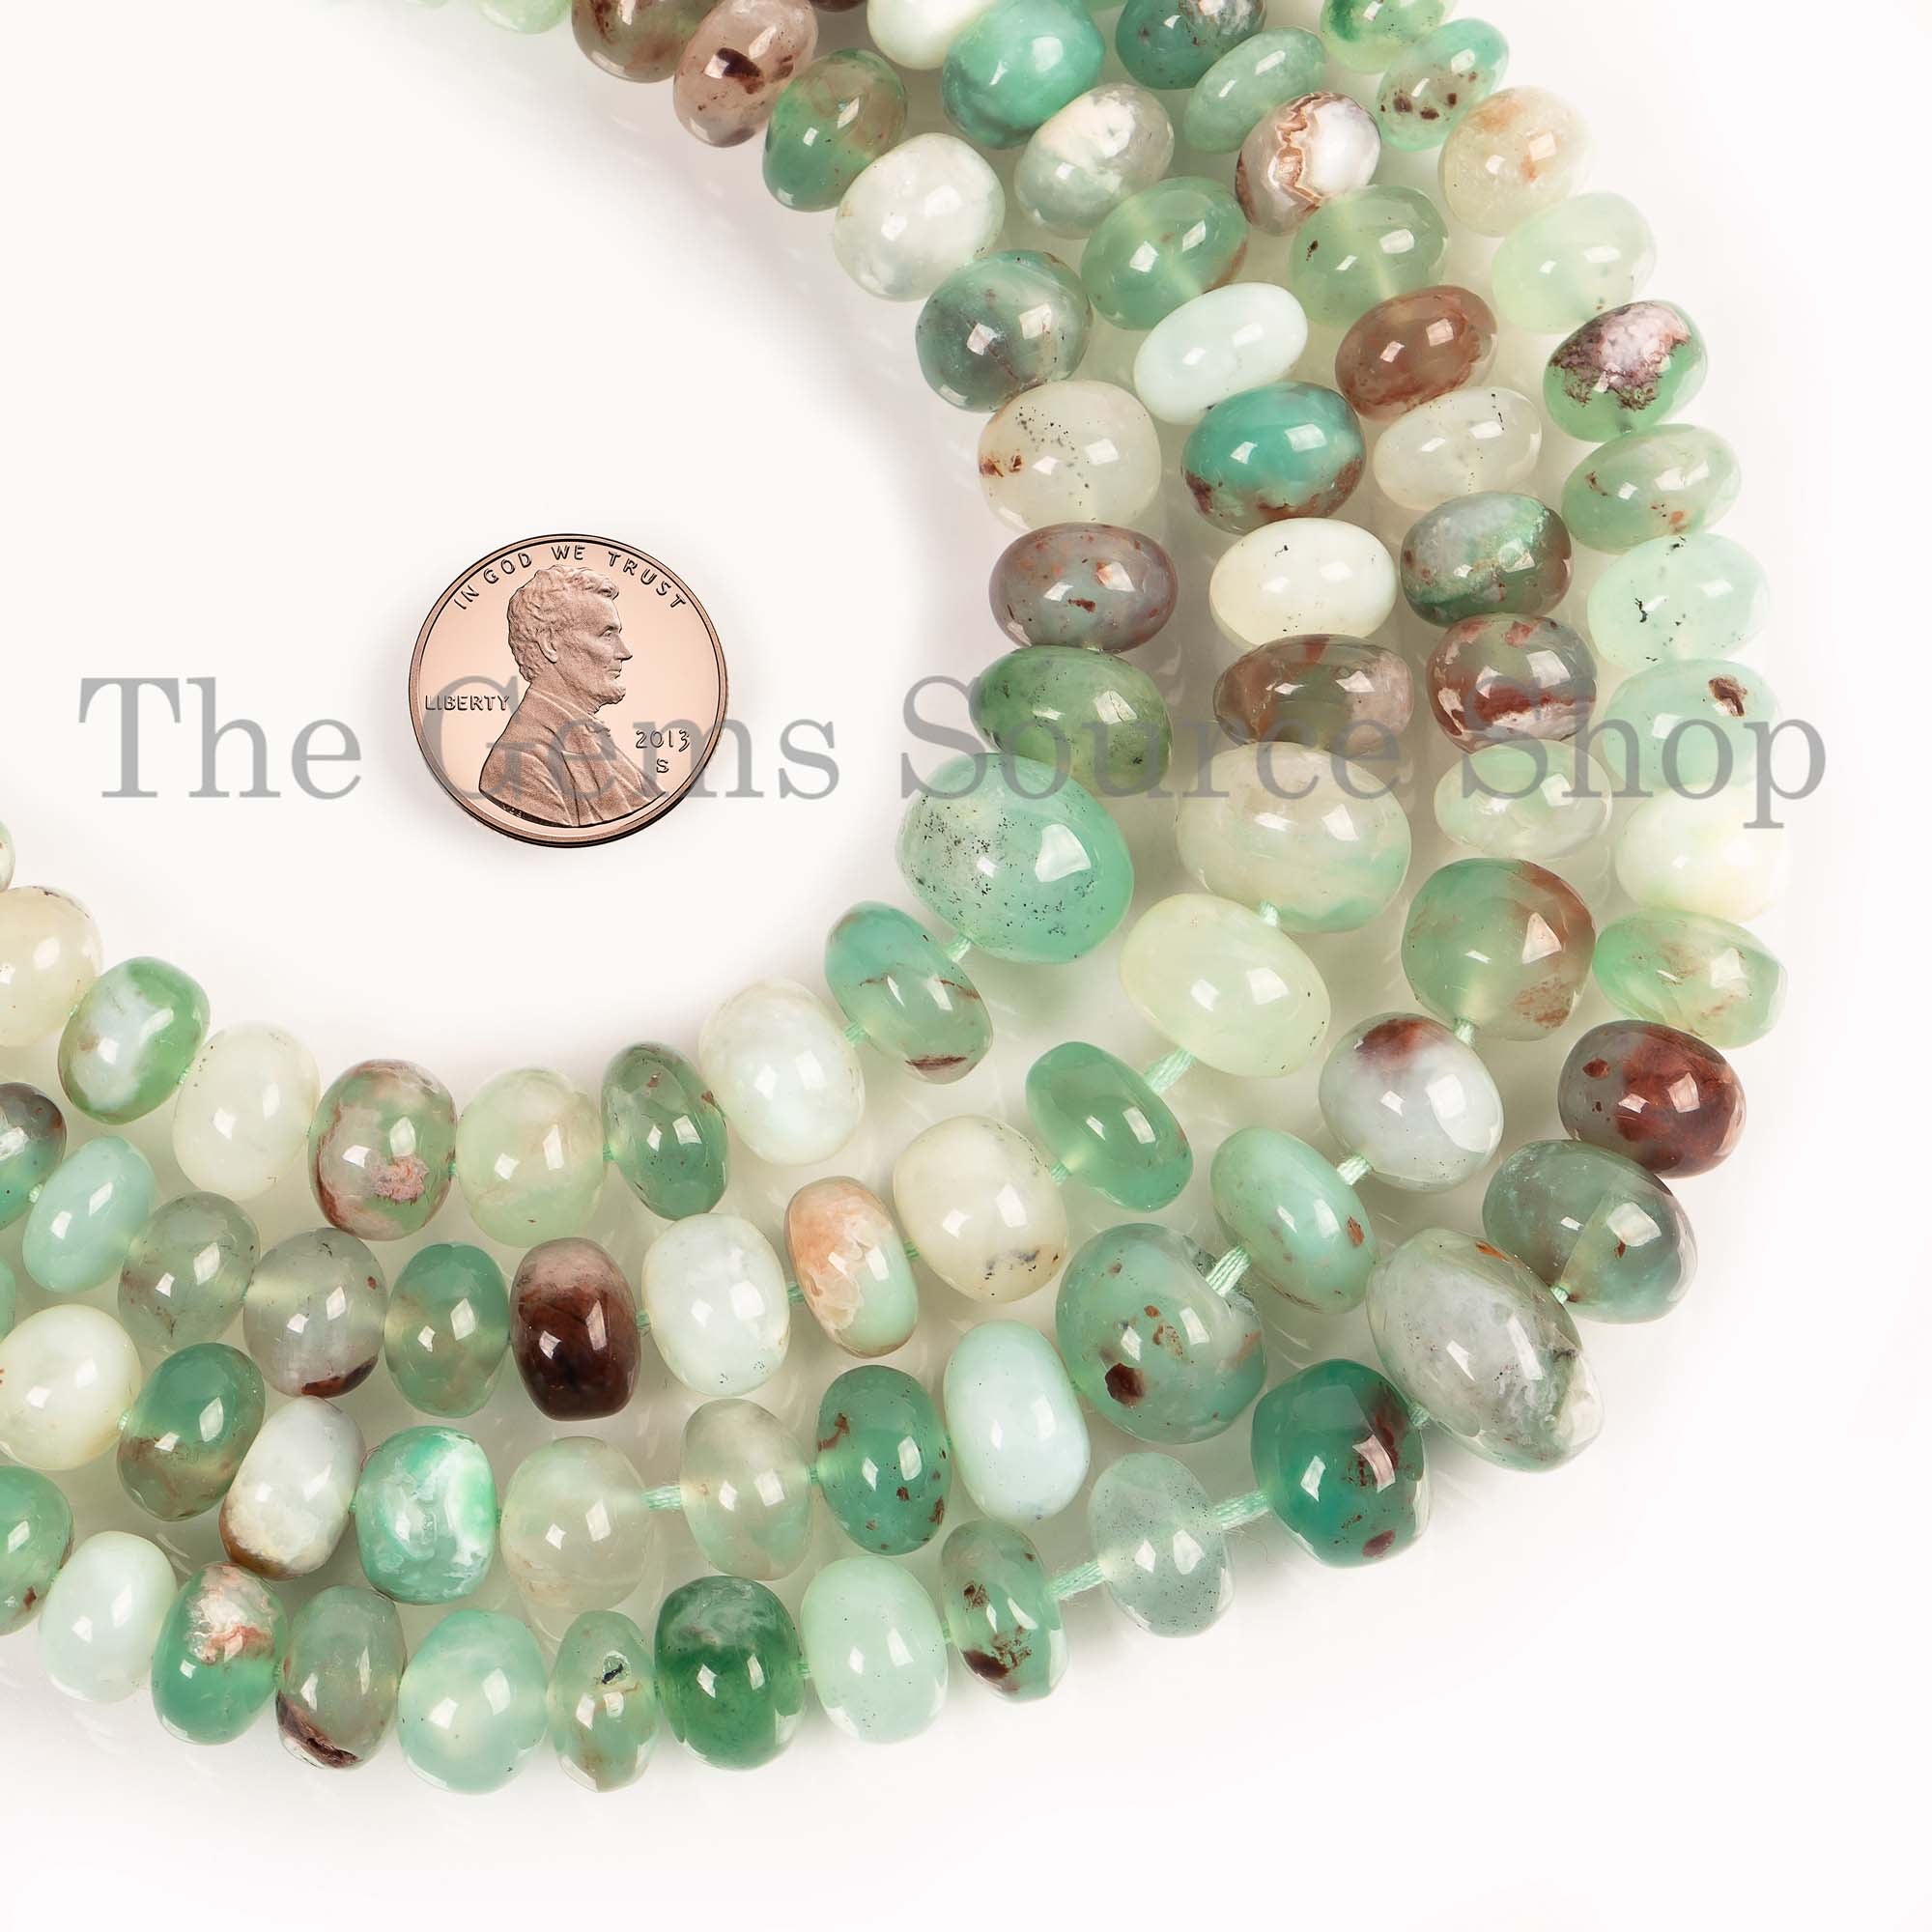 Aqua Chalcedony Smooth Rondelle Beads, 8.5-13mm Aqua Chalcedony Beads, Rondelle Beads, Aqua Chalcedony Beads, Jewelry making Beads